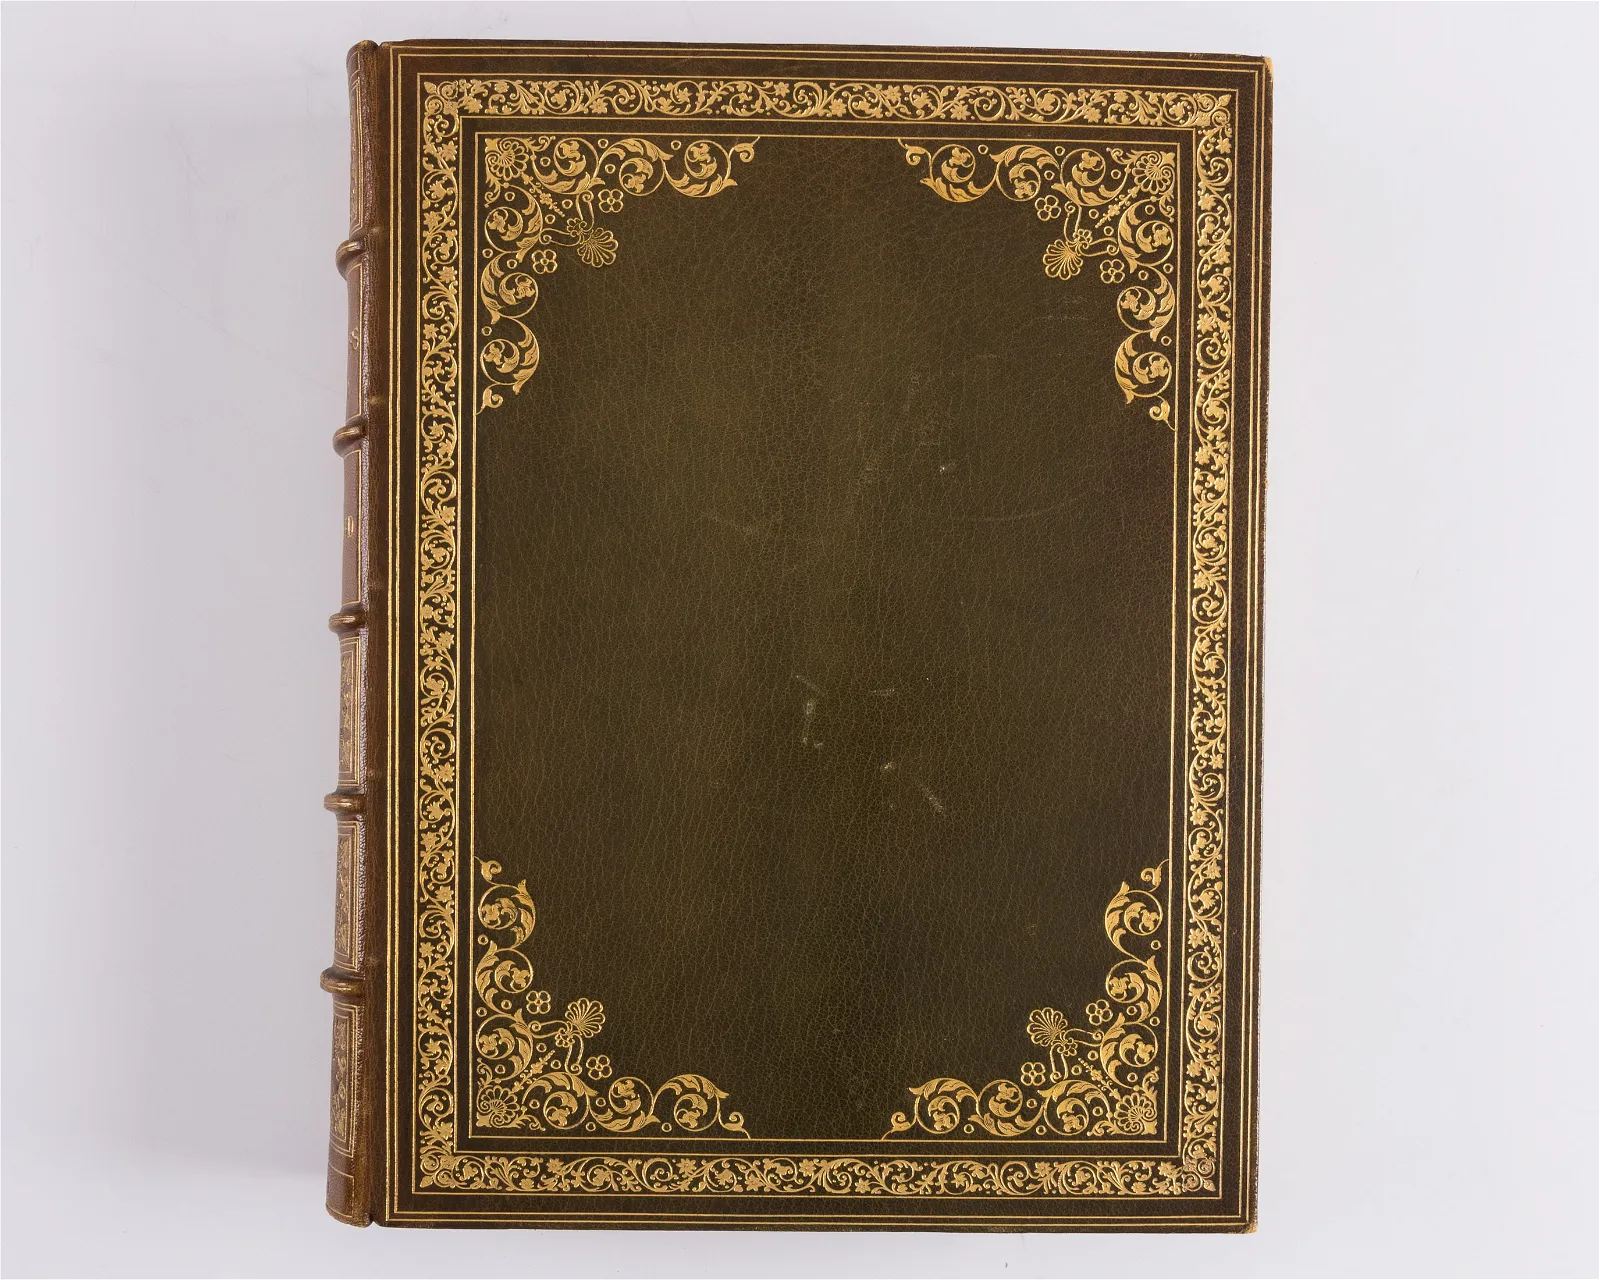 5 Folios on English History, Goupil & Co Printings